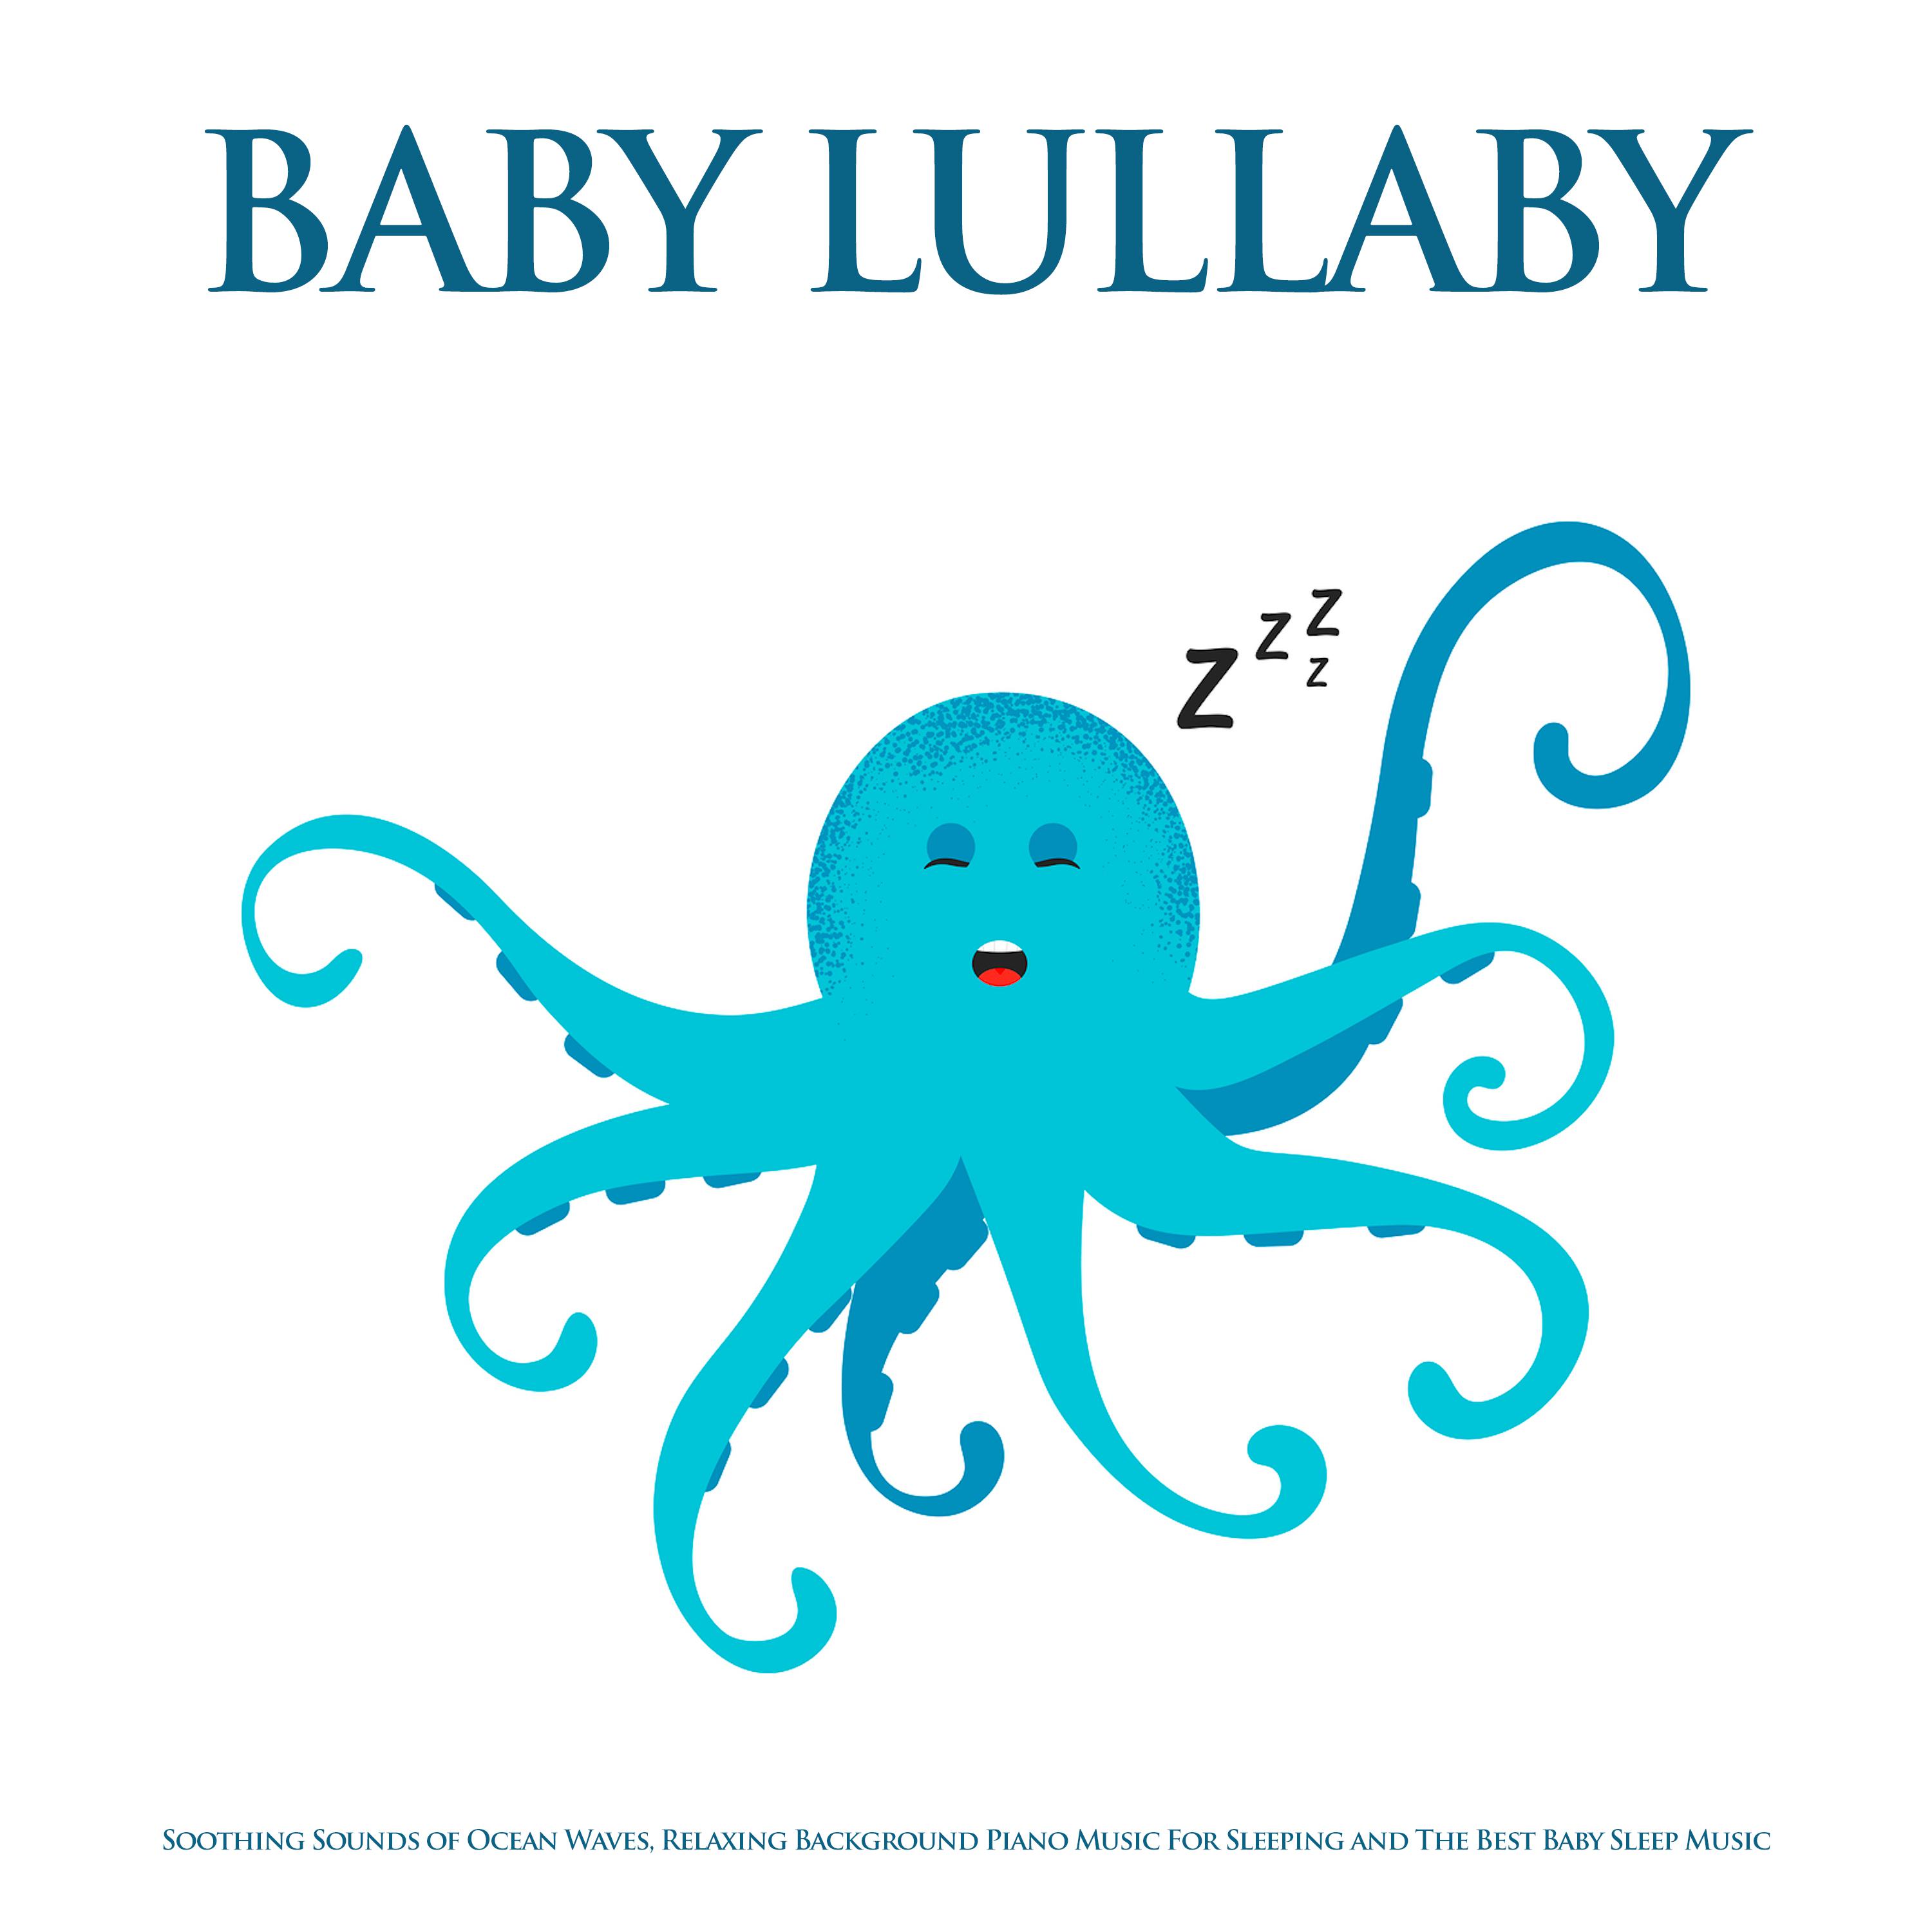 Baby Lullabies - Calm Piano Music